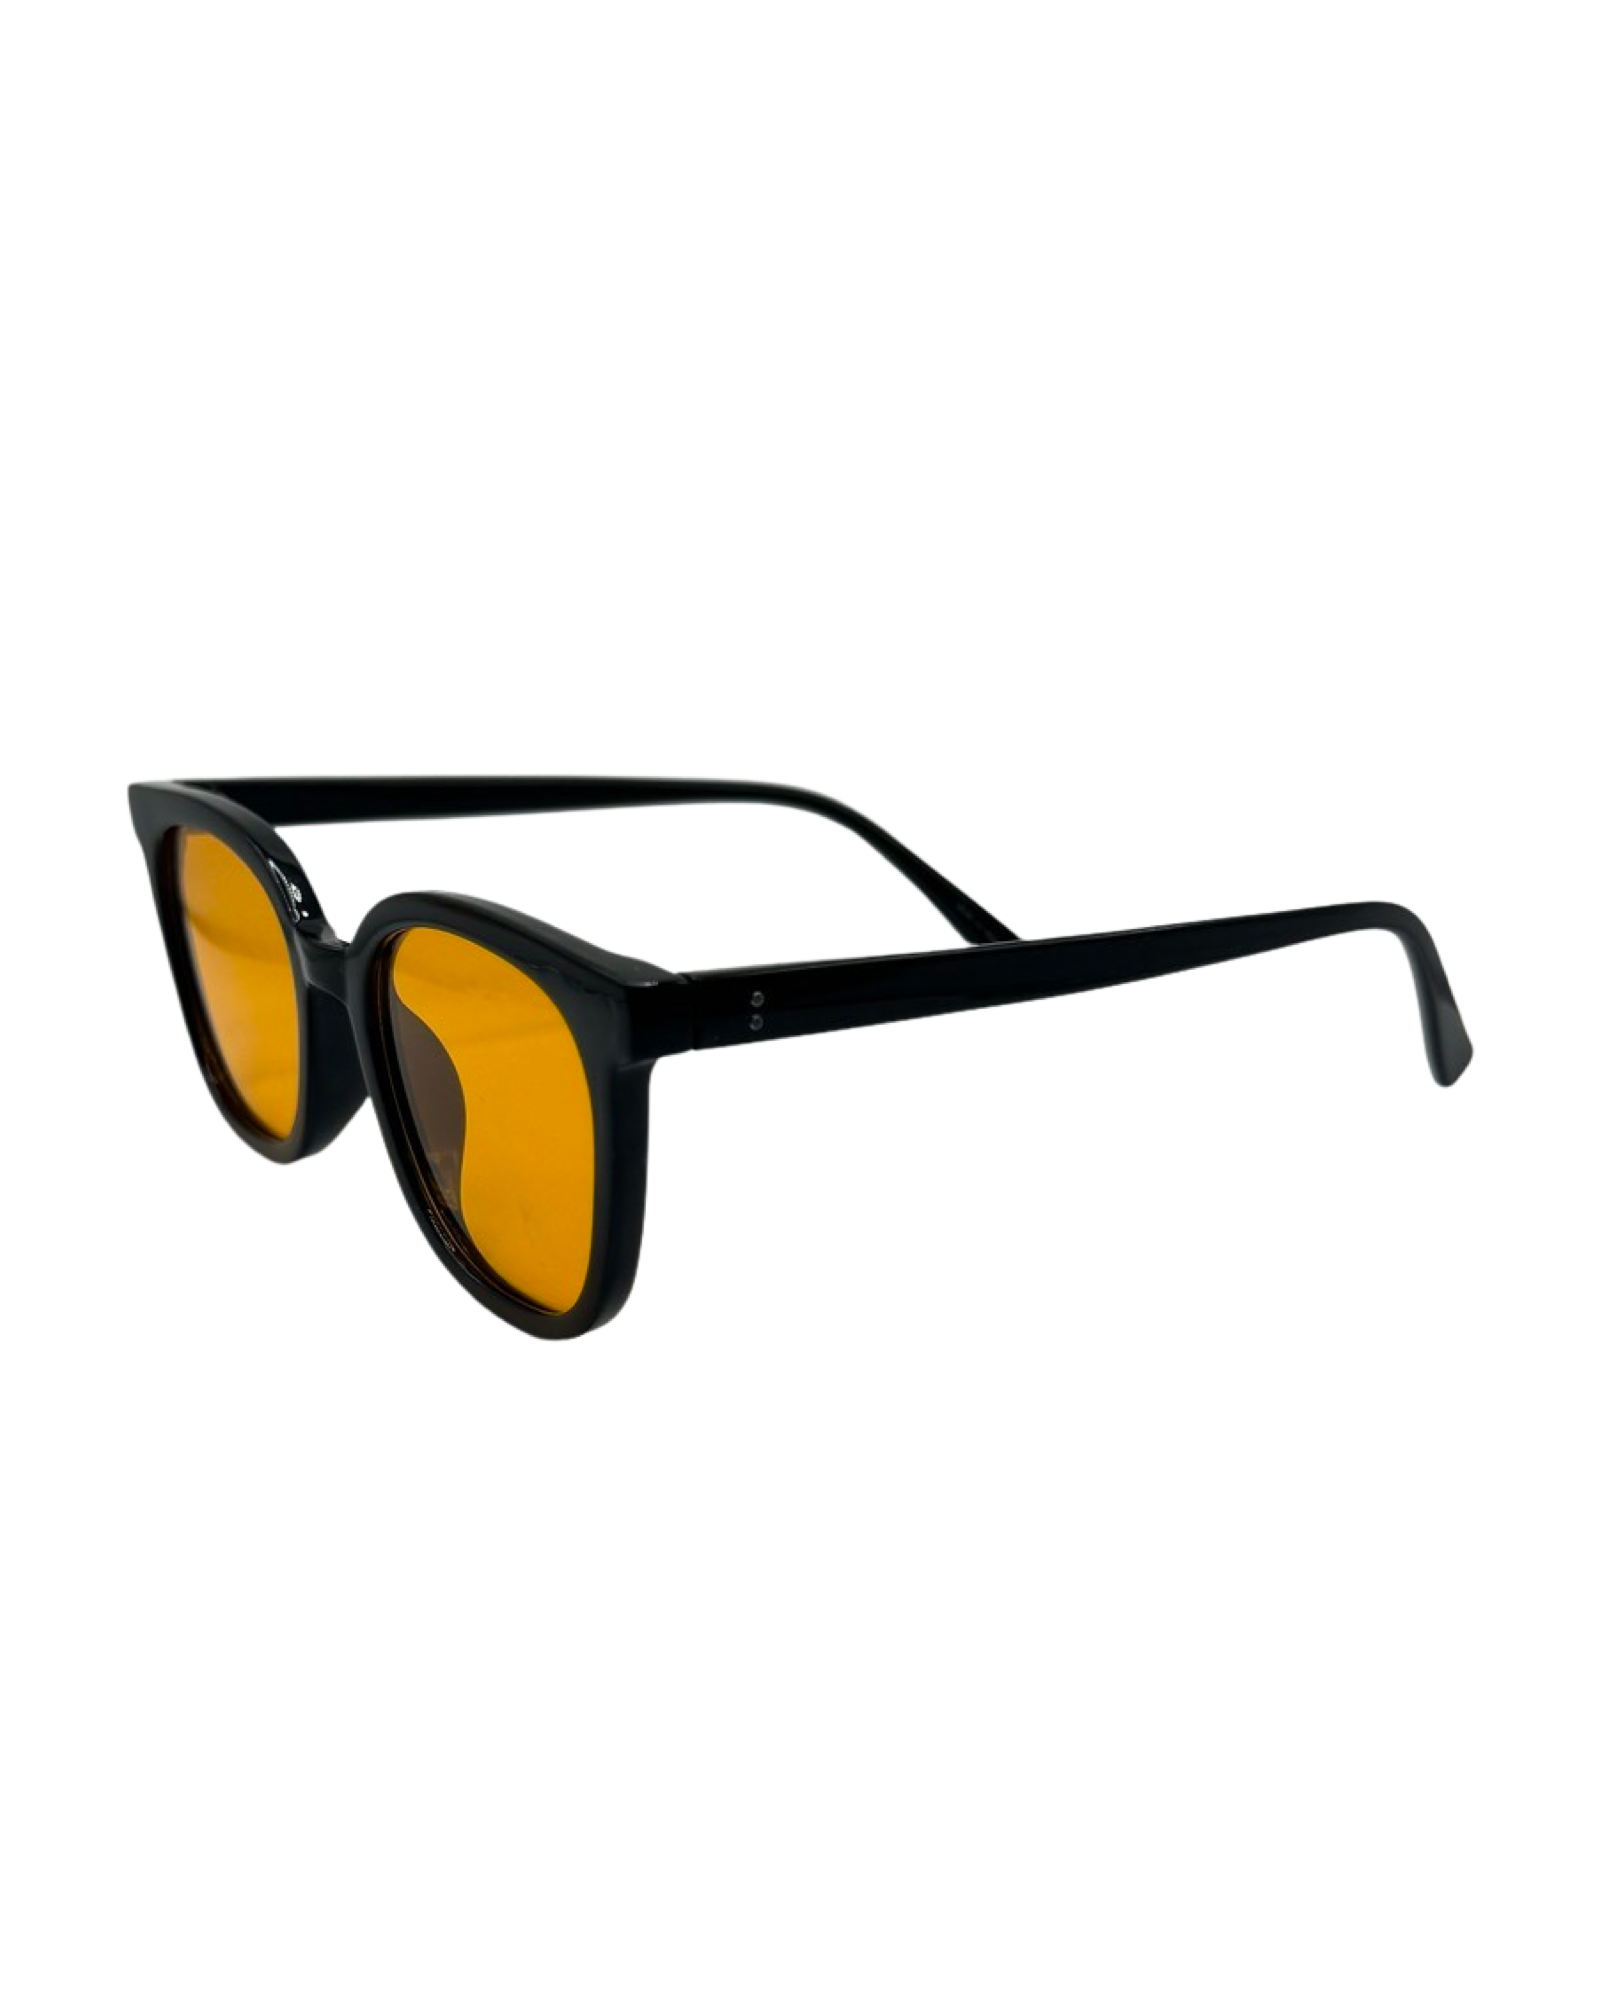 Tinted Sunglasses - Orange